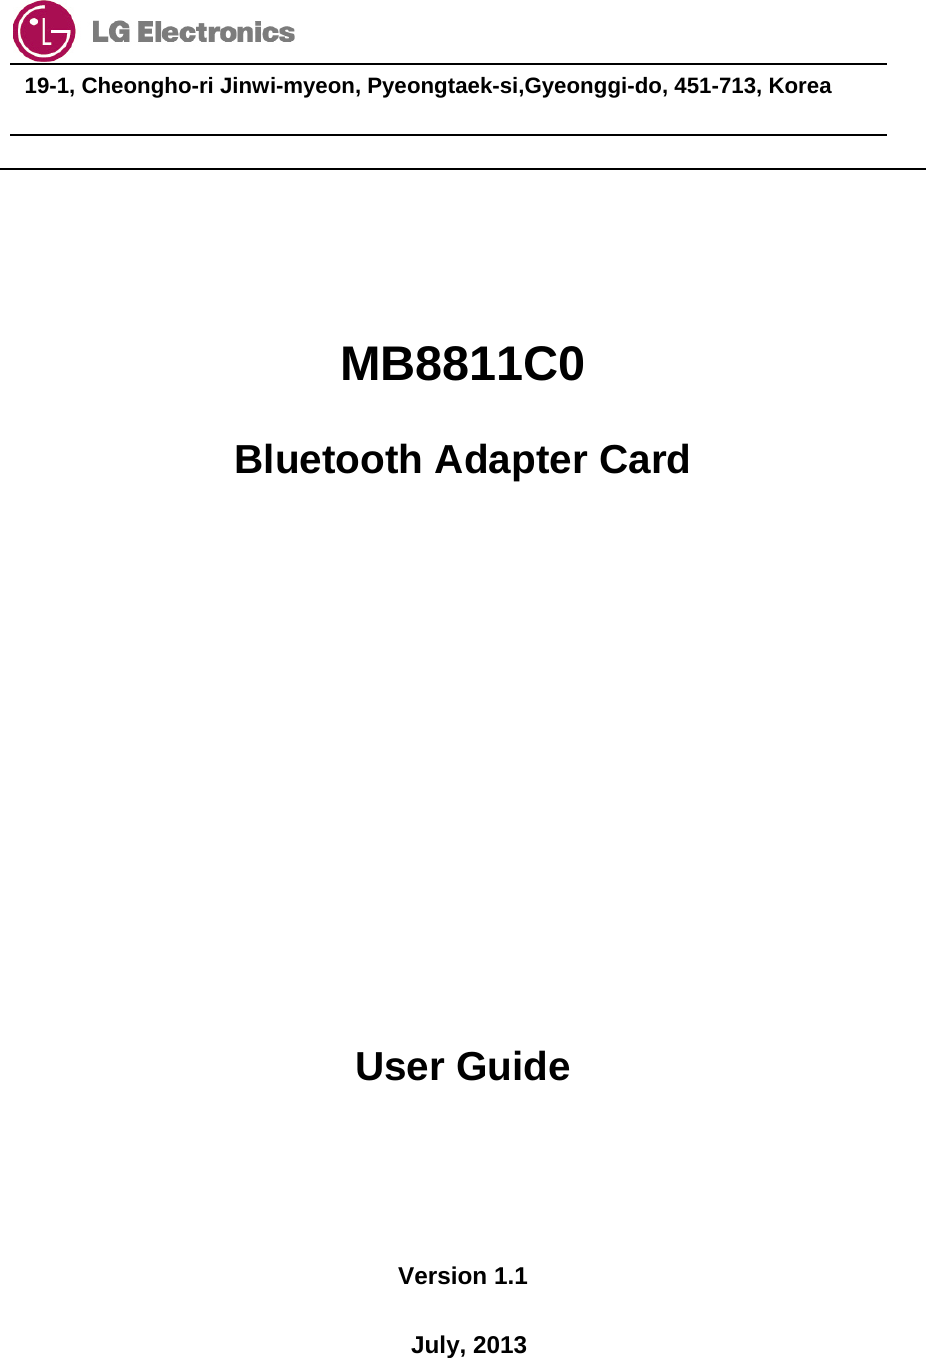                                  19-1, Cheongho-ri Jinwi-myeon, Pyeongtaek-si,Gyeonggi-do, 451-713, Korea        MB8811C0 Bluetooth Adapter Card         User Guide   Version 1.1  July, 2013 